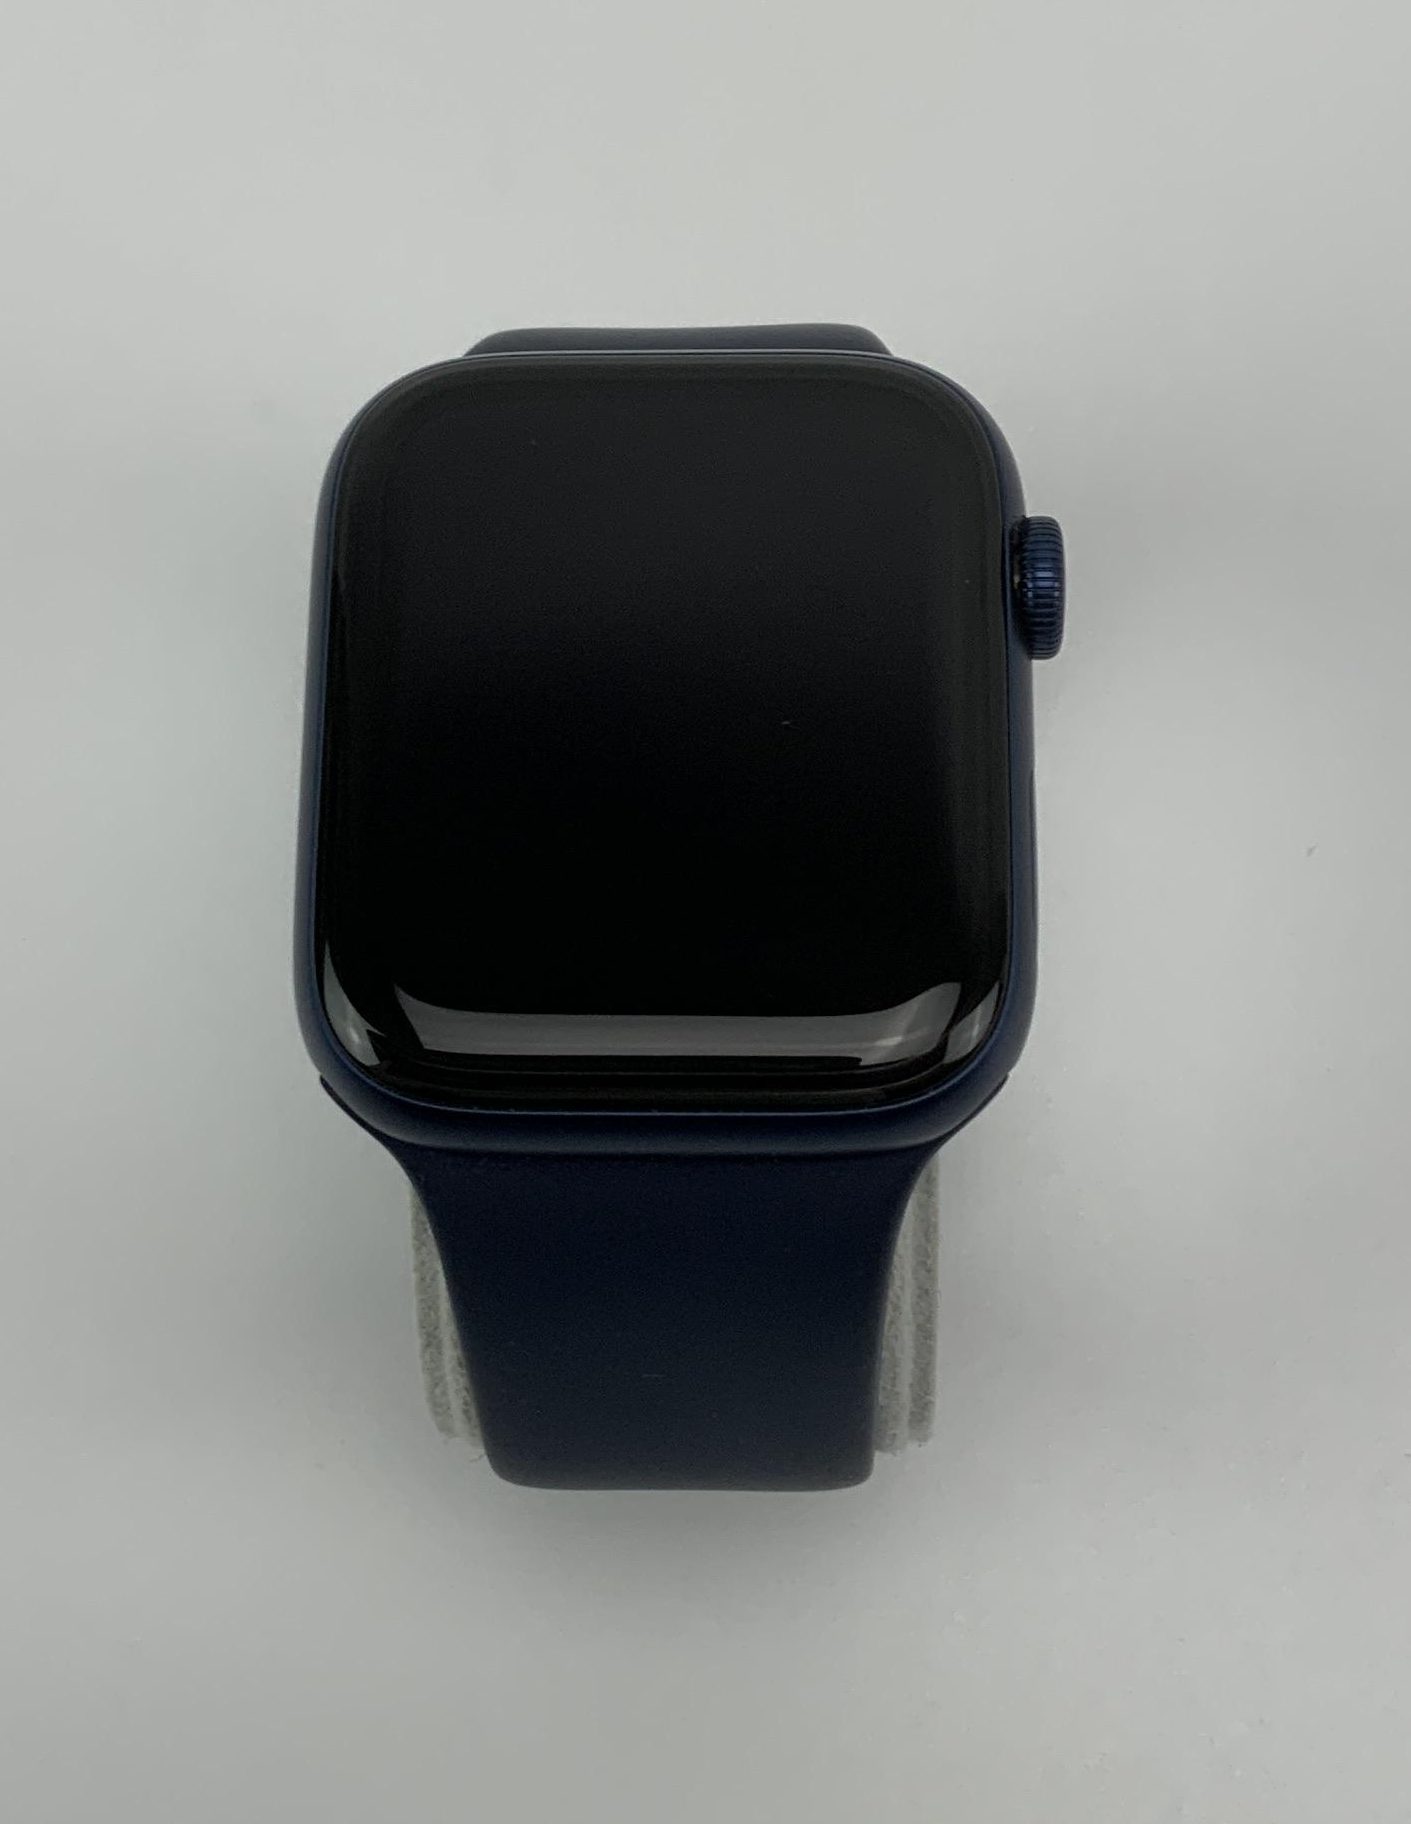 Watch Series 6 Aluminum Cellular (44mm), Blue, image 1